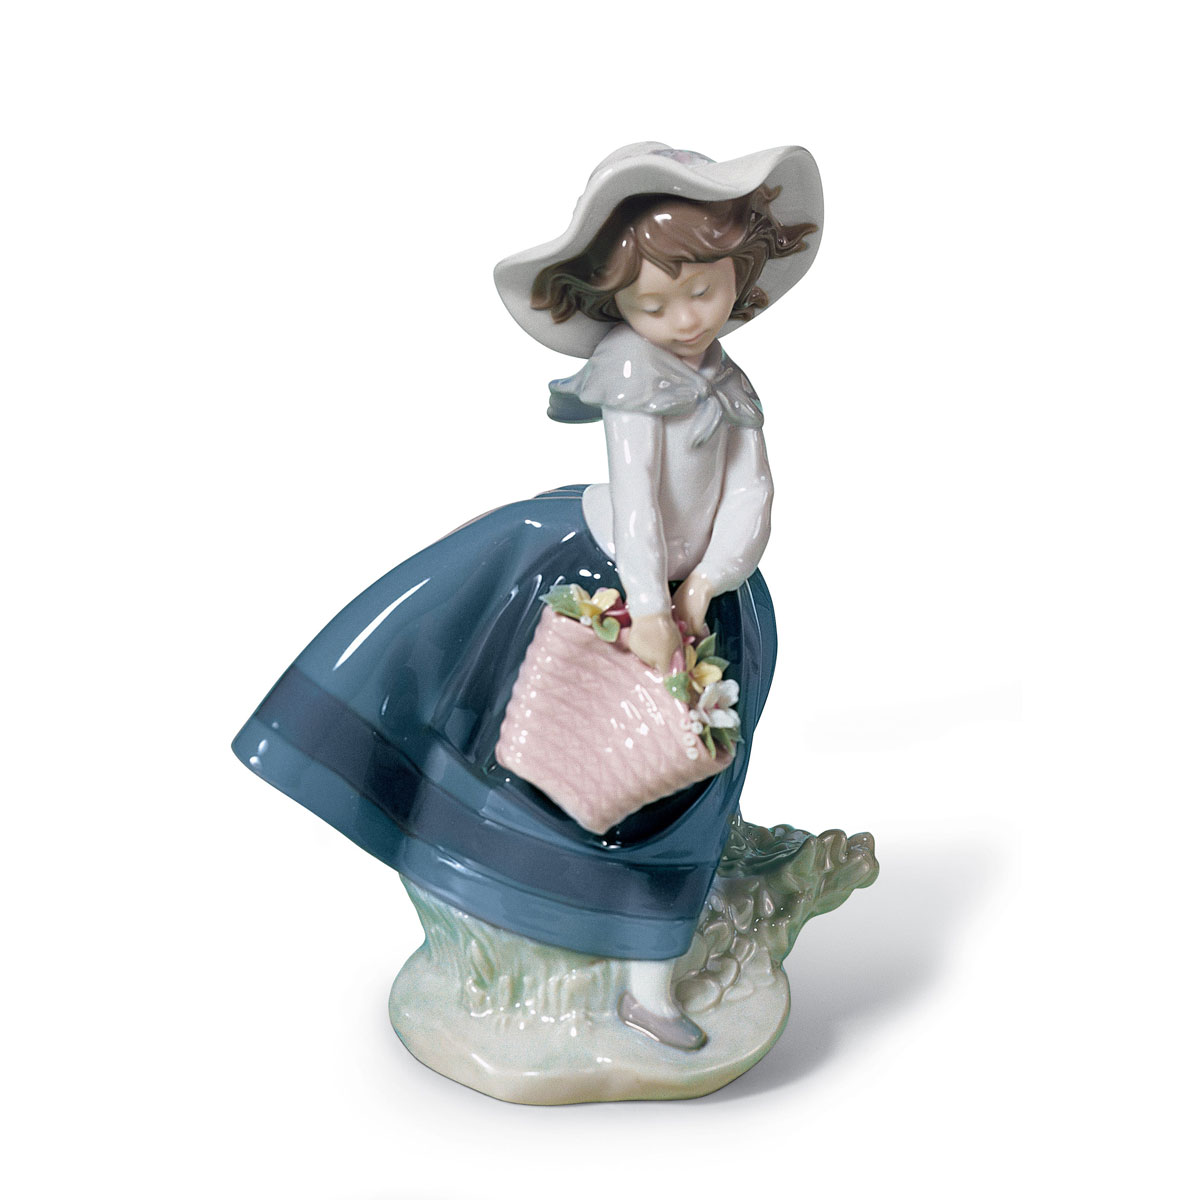 Lladro Classic Sculpture, Pretty Pickings Girl Figurine